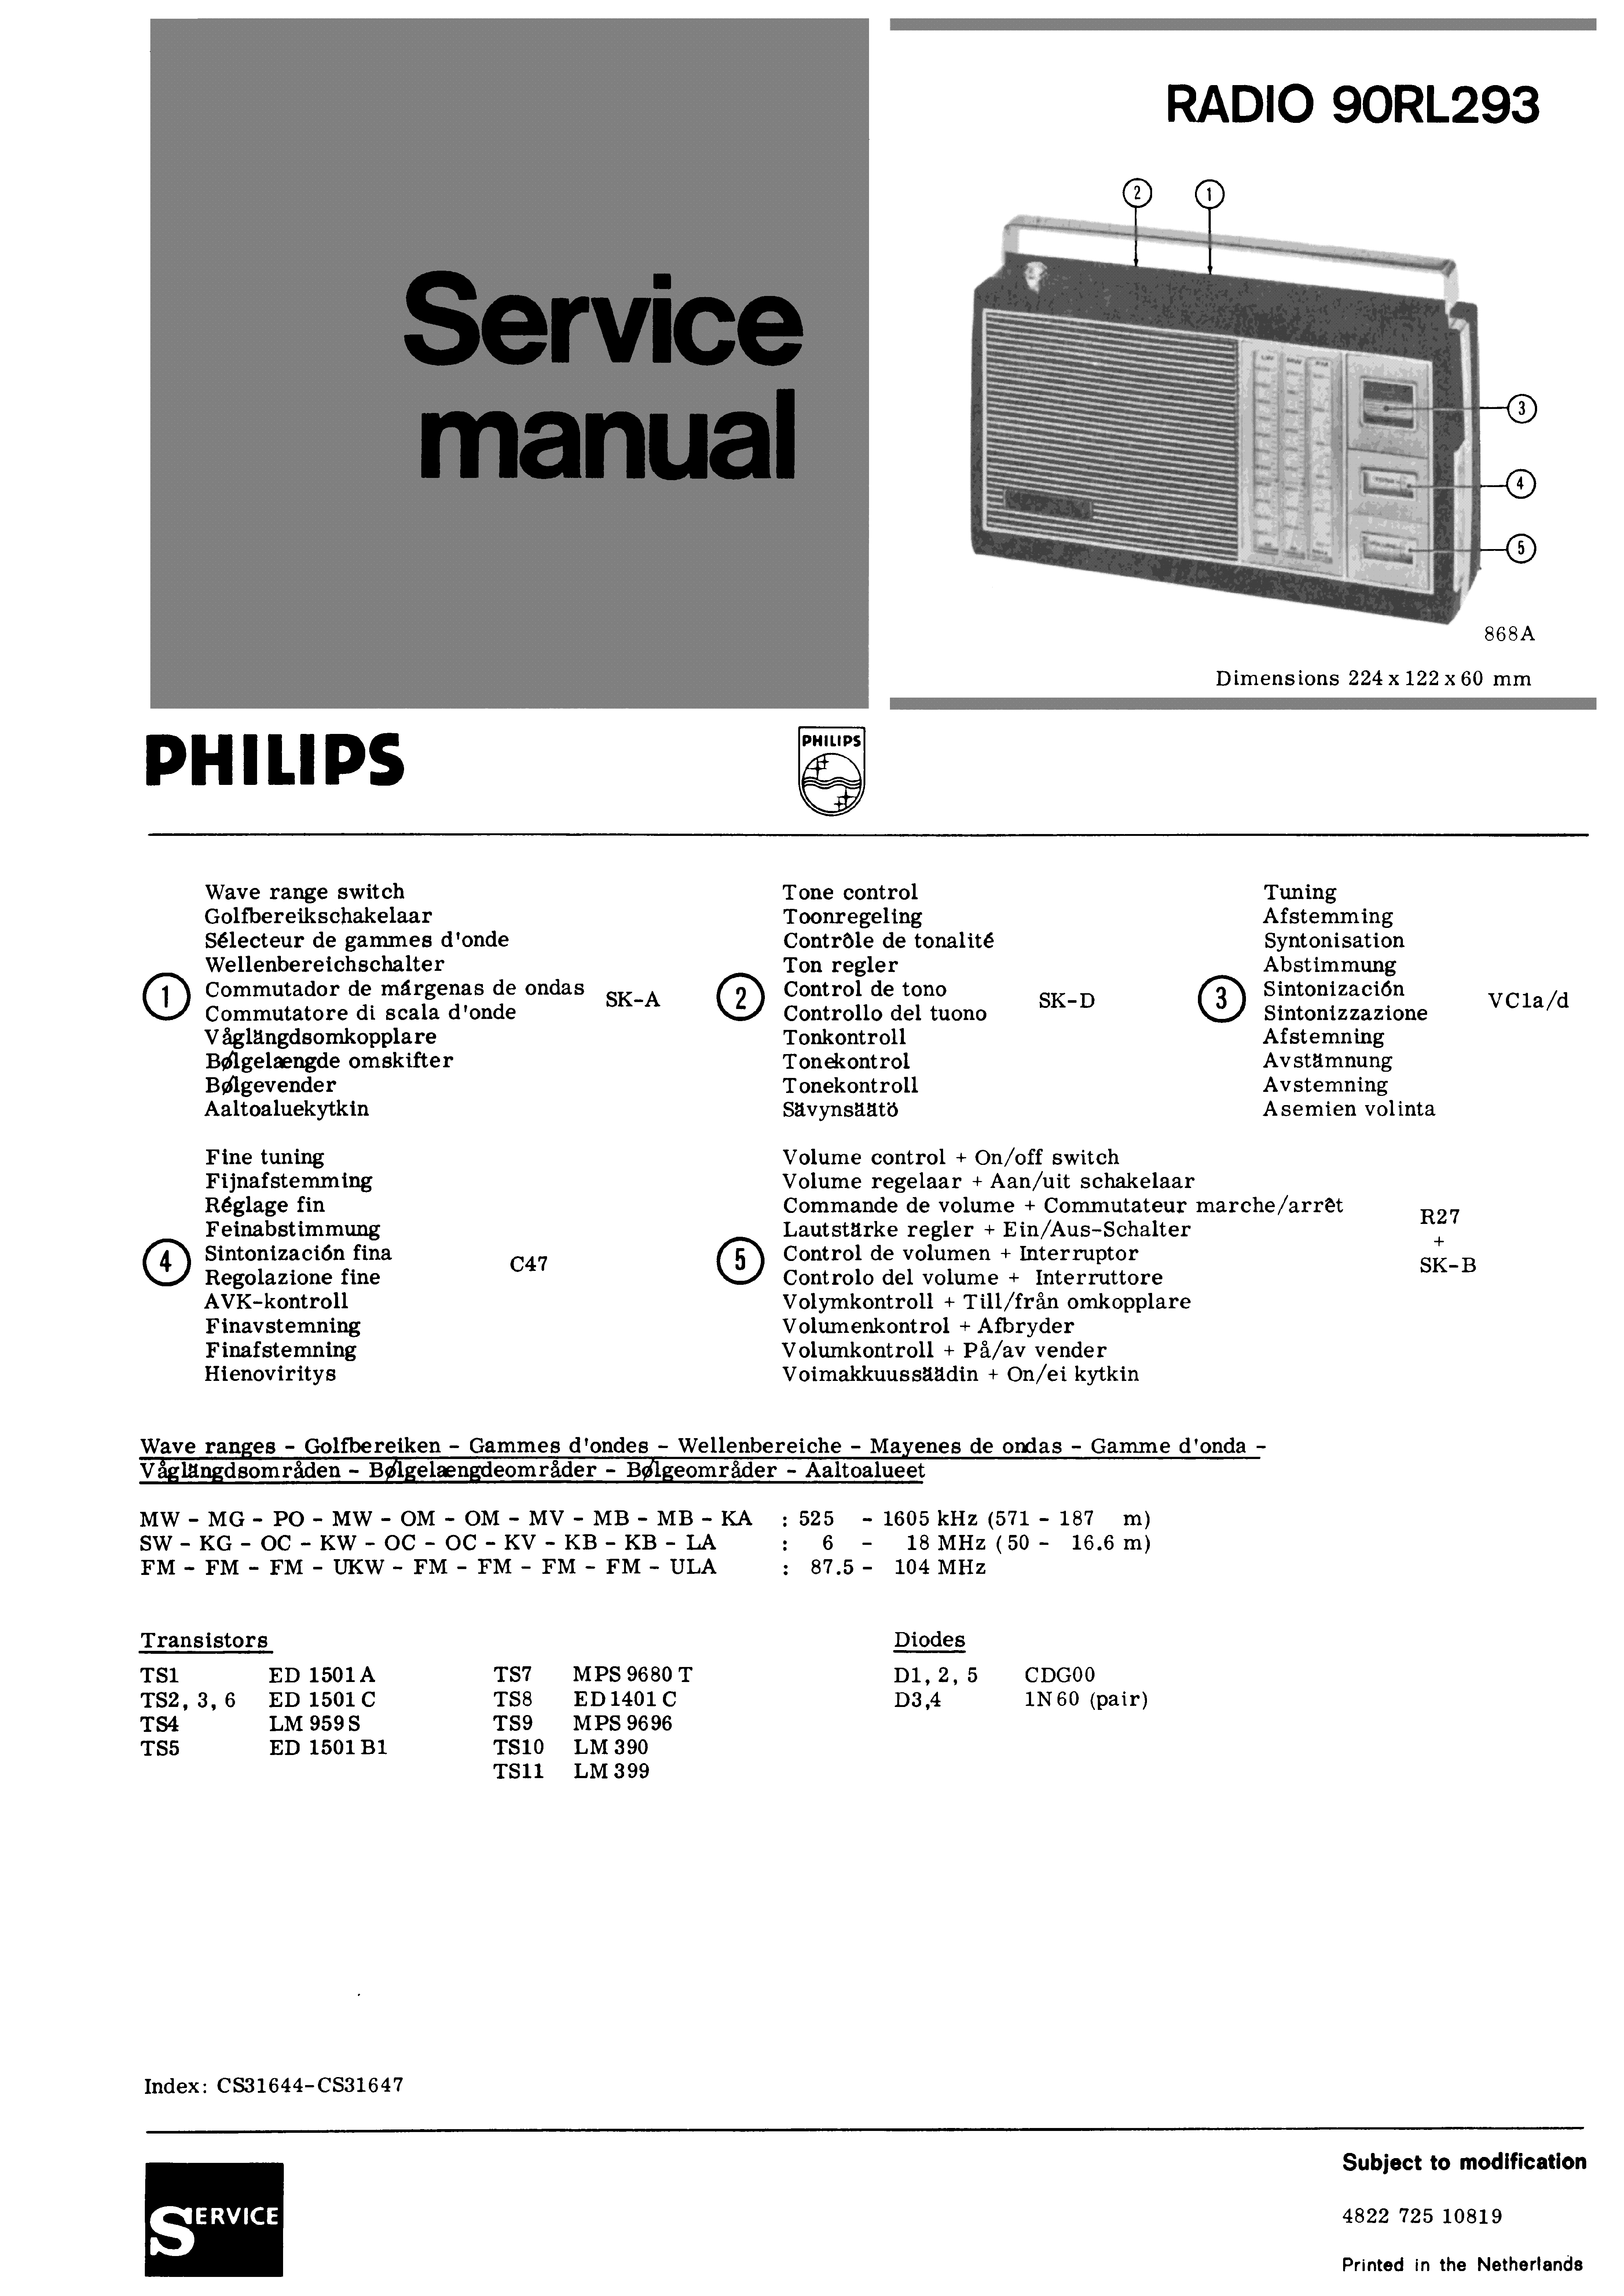 PHILIPS RADIO 90RL293 SM service manual (1st page)